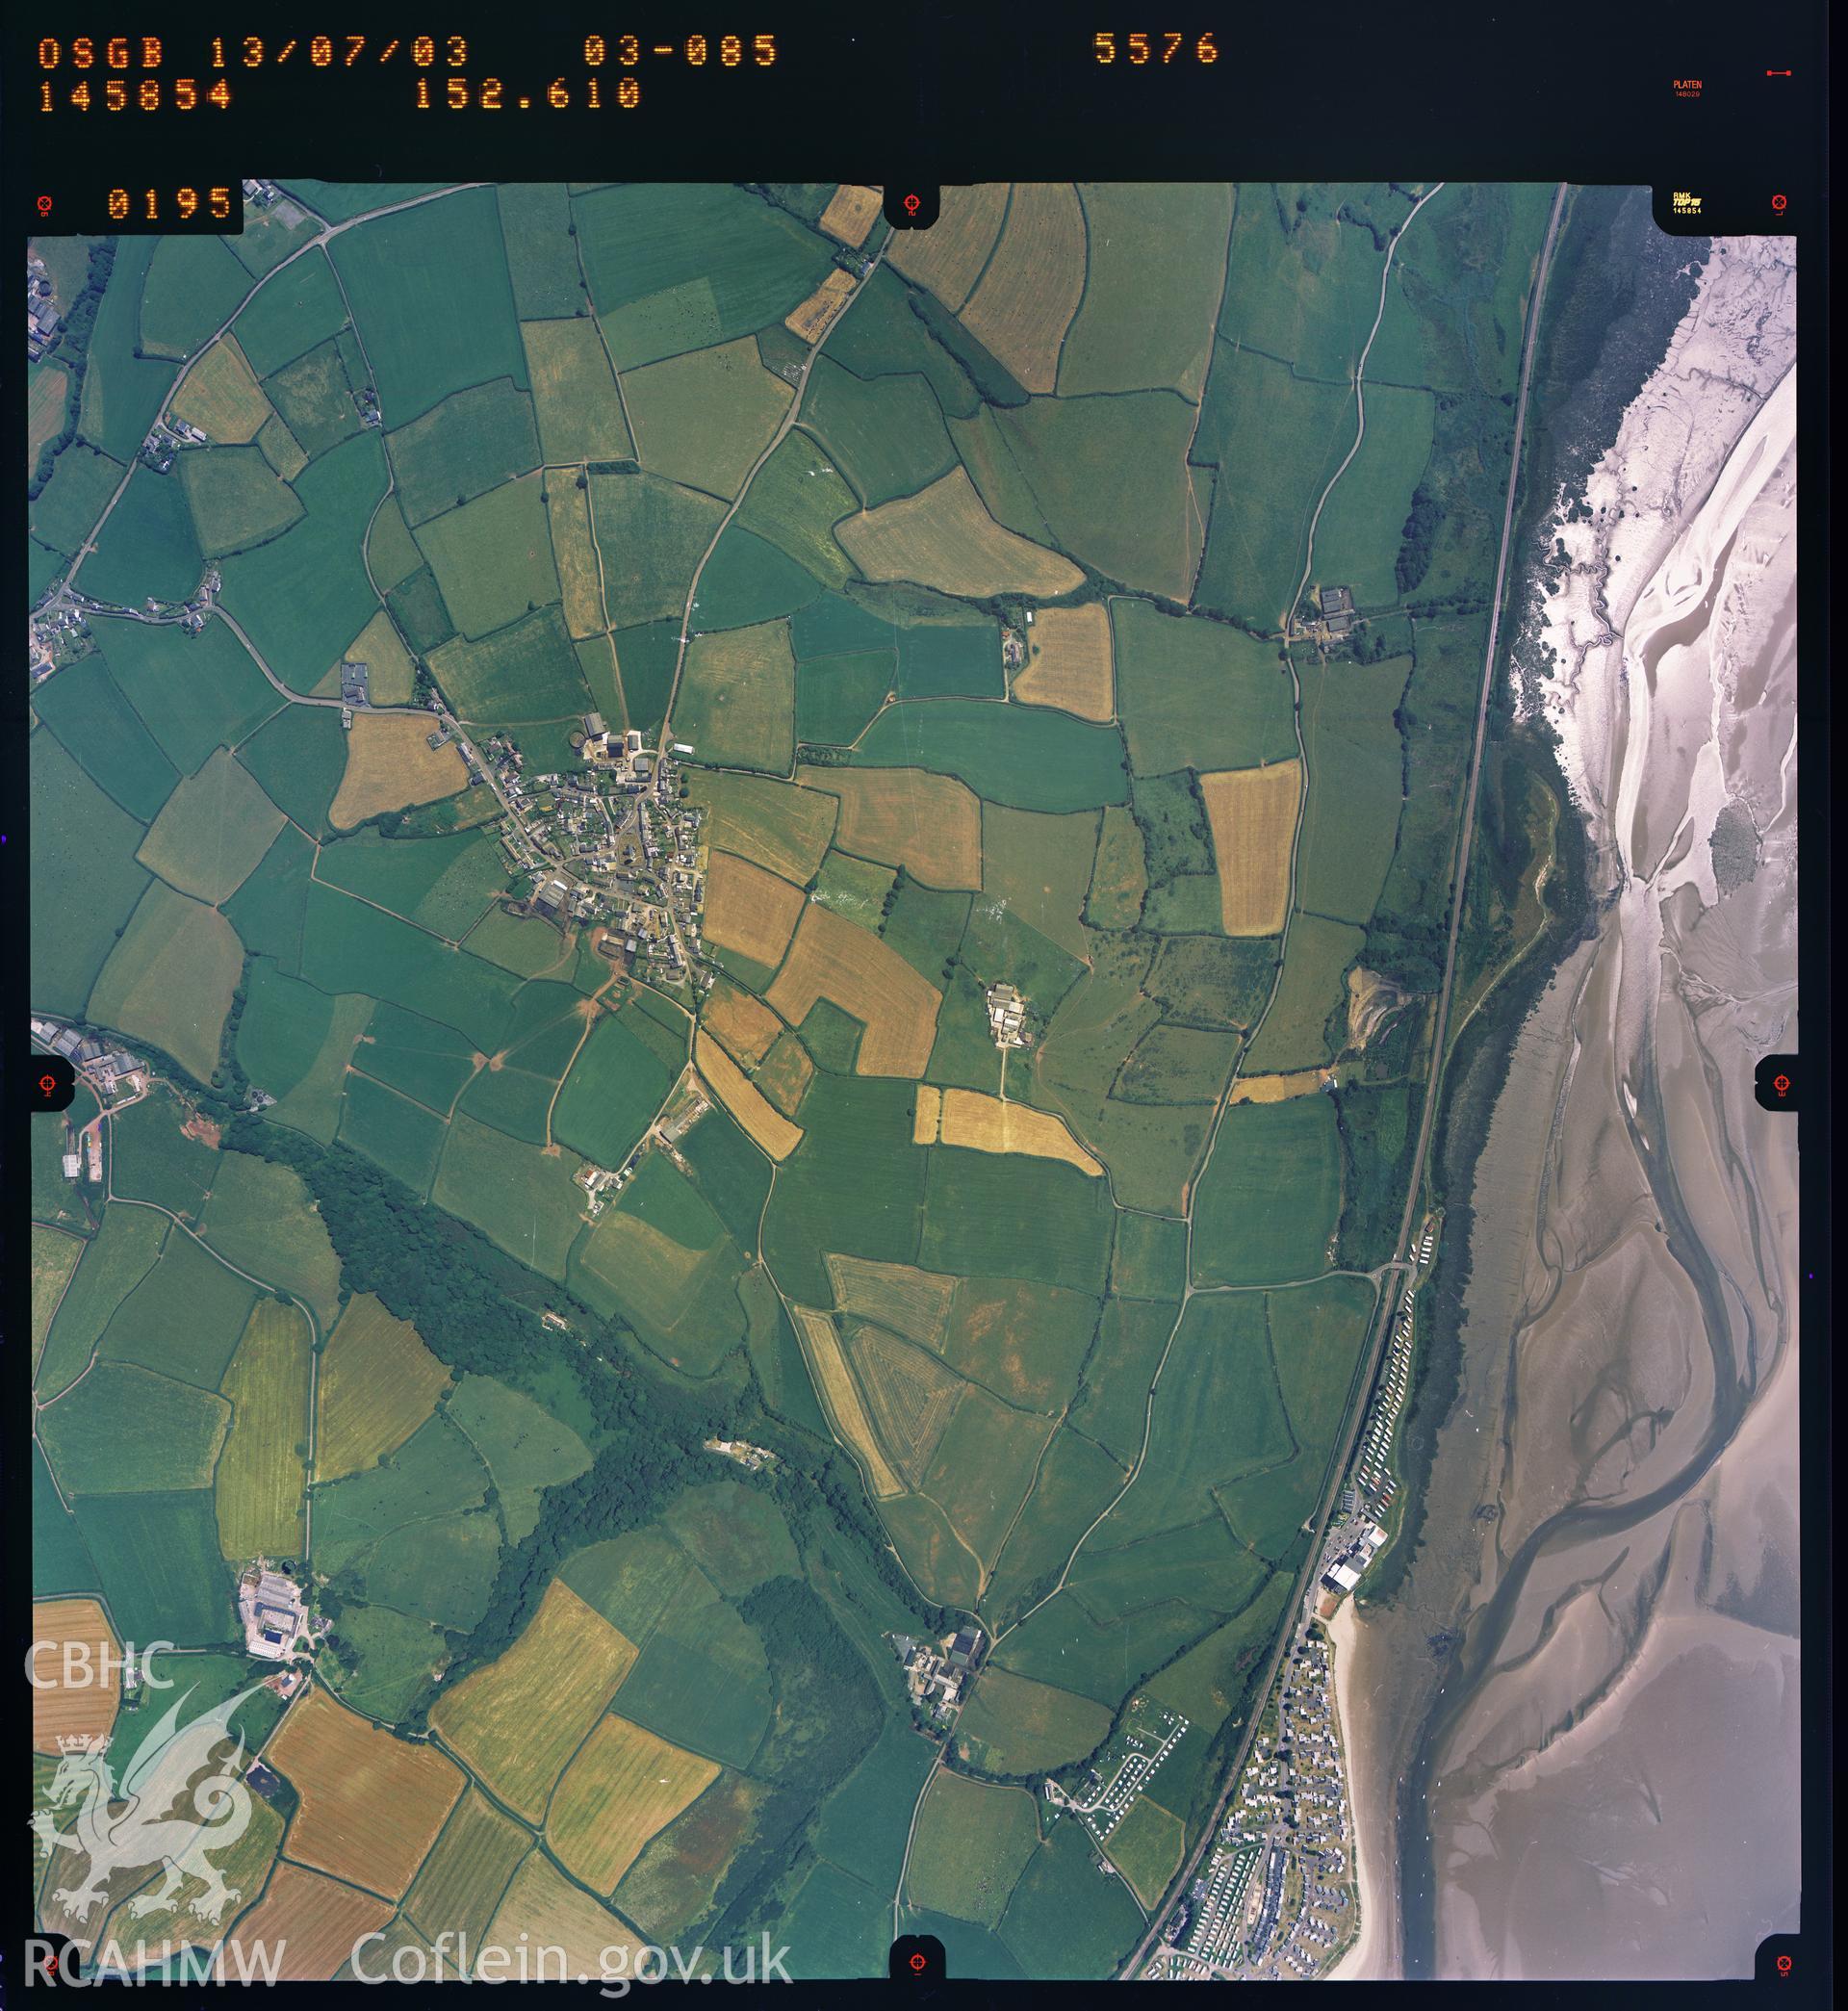 Digitized copy of a colour aerial photograph showing the Llansaint area, taken by Ordnance Survey, 2003.